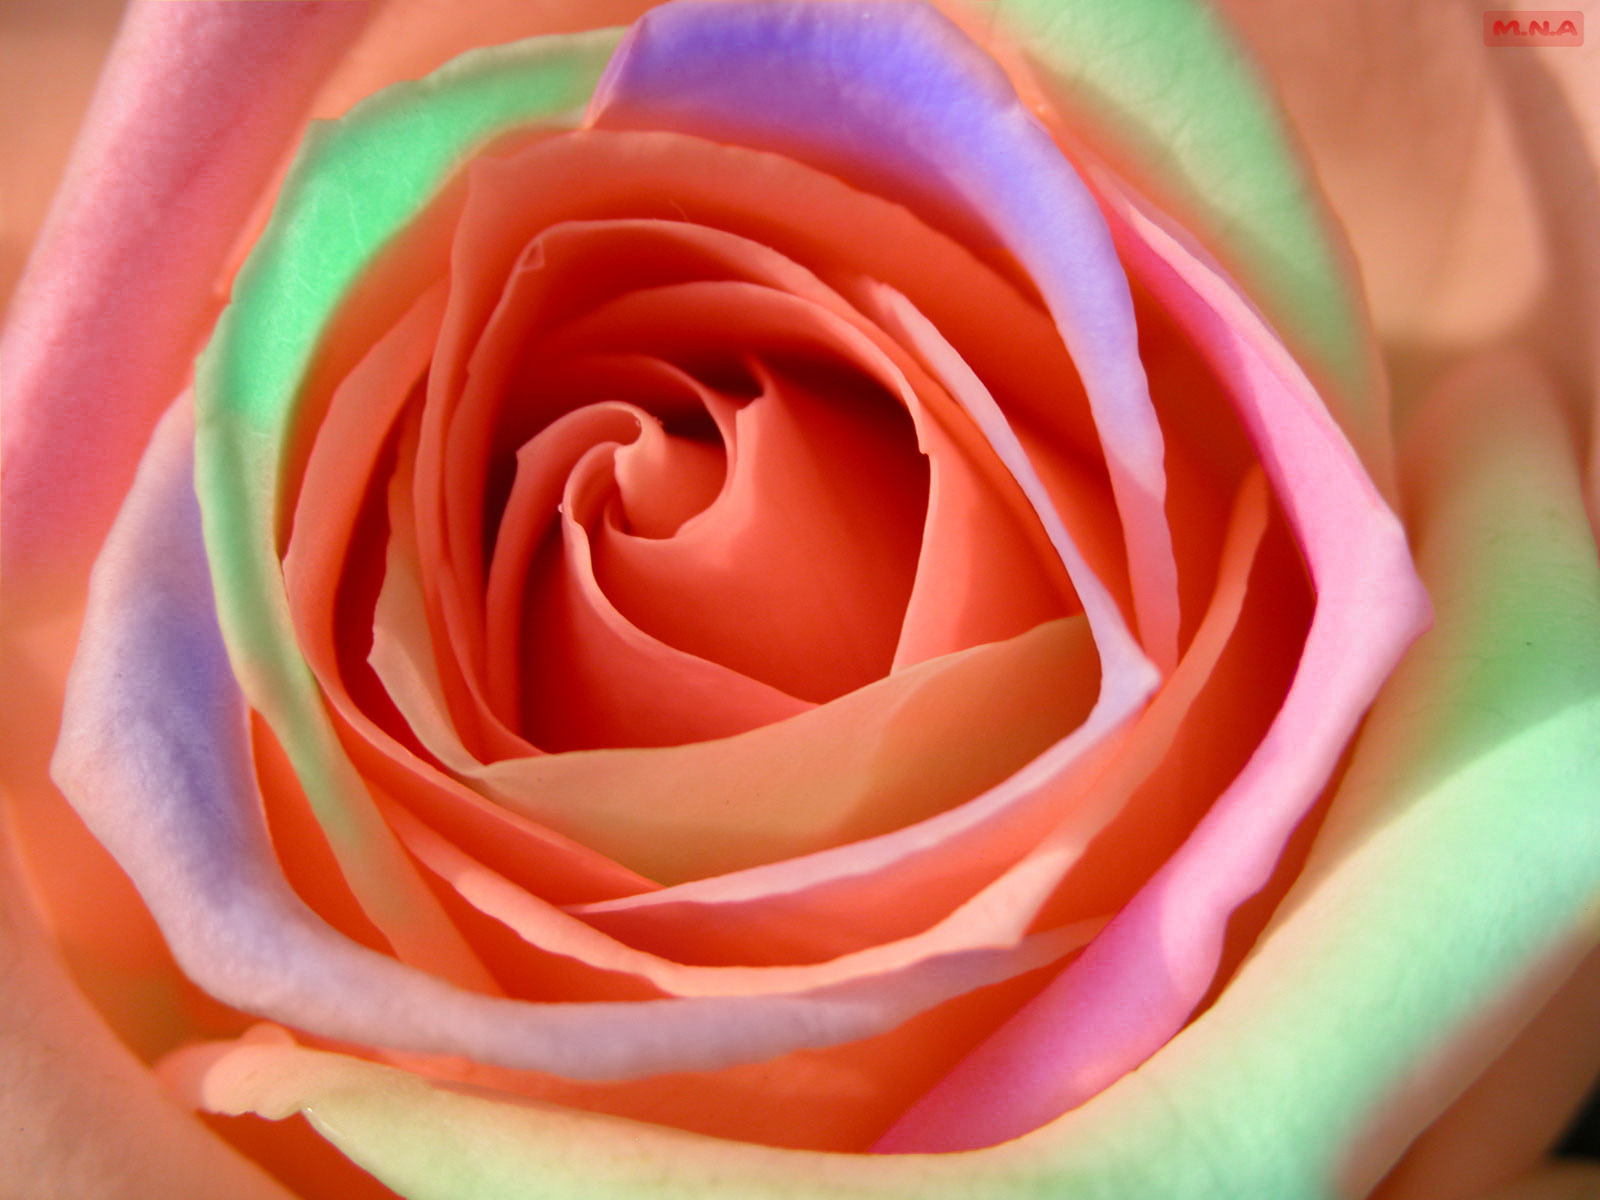 Rose Flower Wallpaper Download - 1080p Rose Image Hd - 1600x1200 Wallpaper  